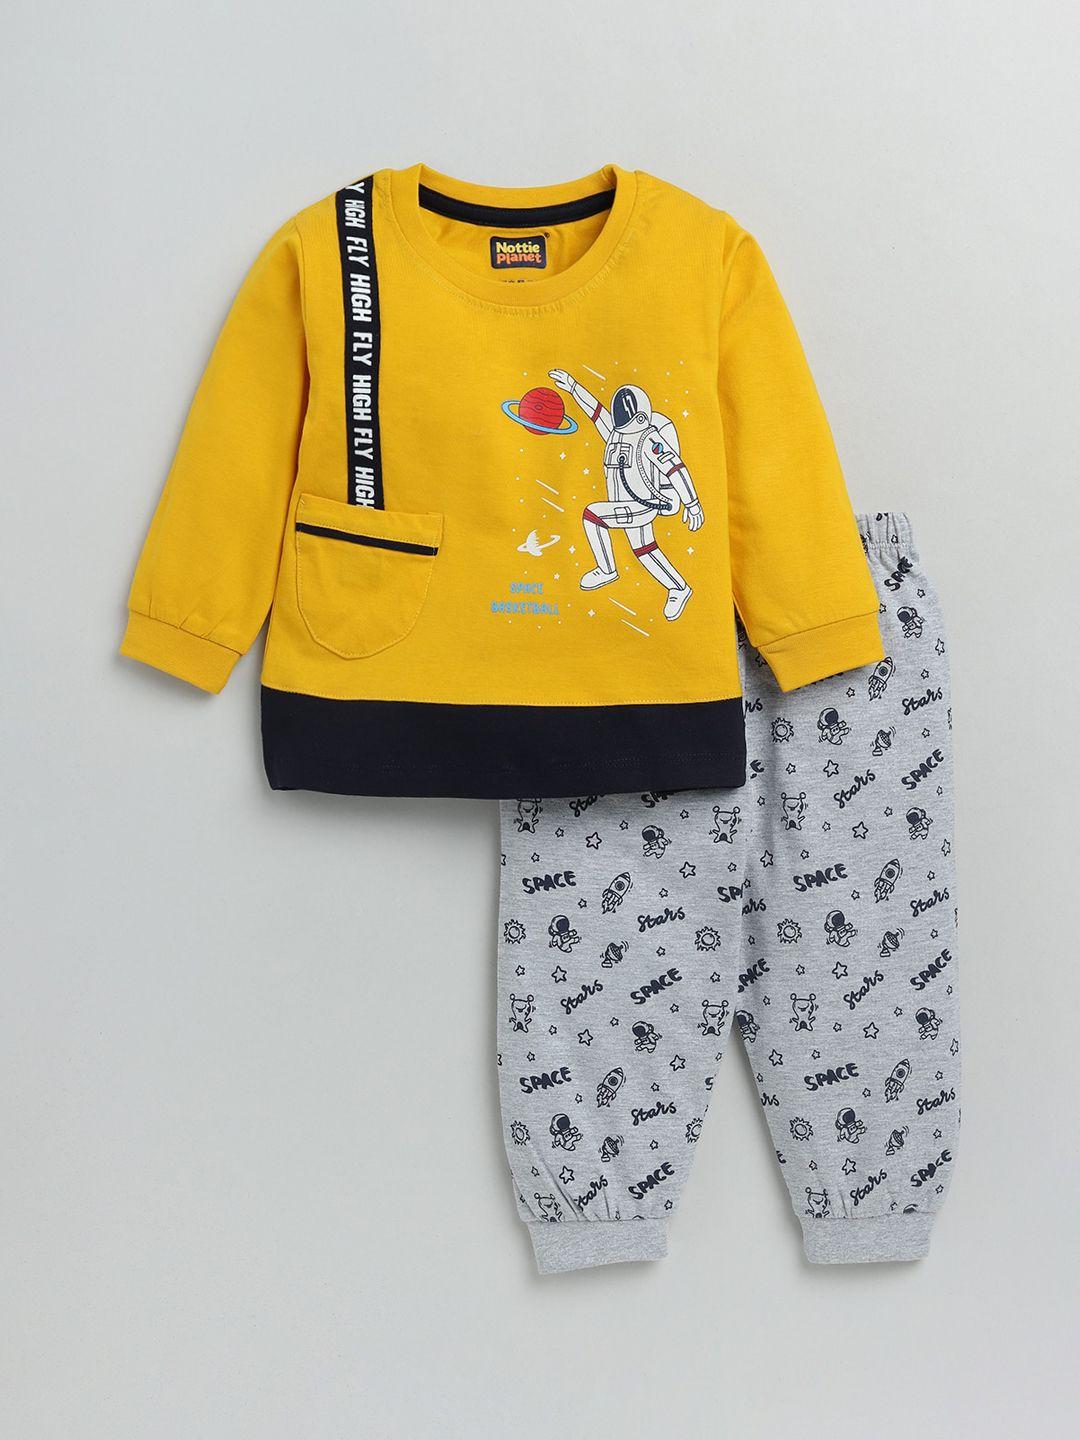 nottie planet boys yellow & grey printed cotton t-shirt with pyjamas